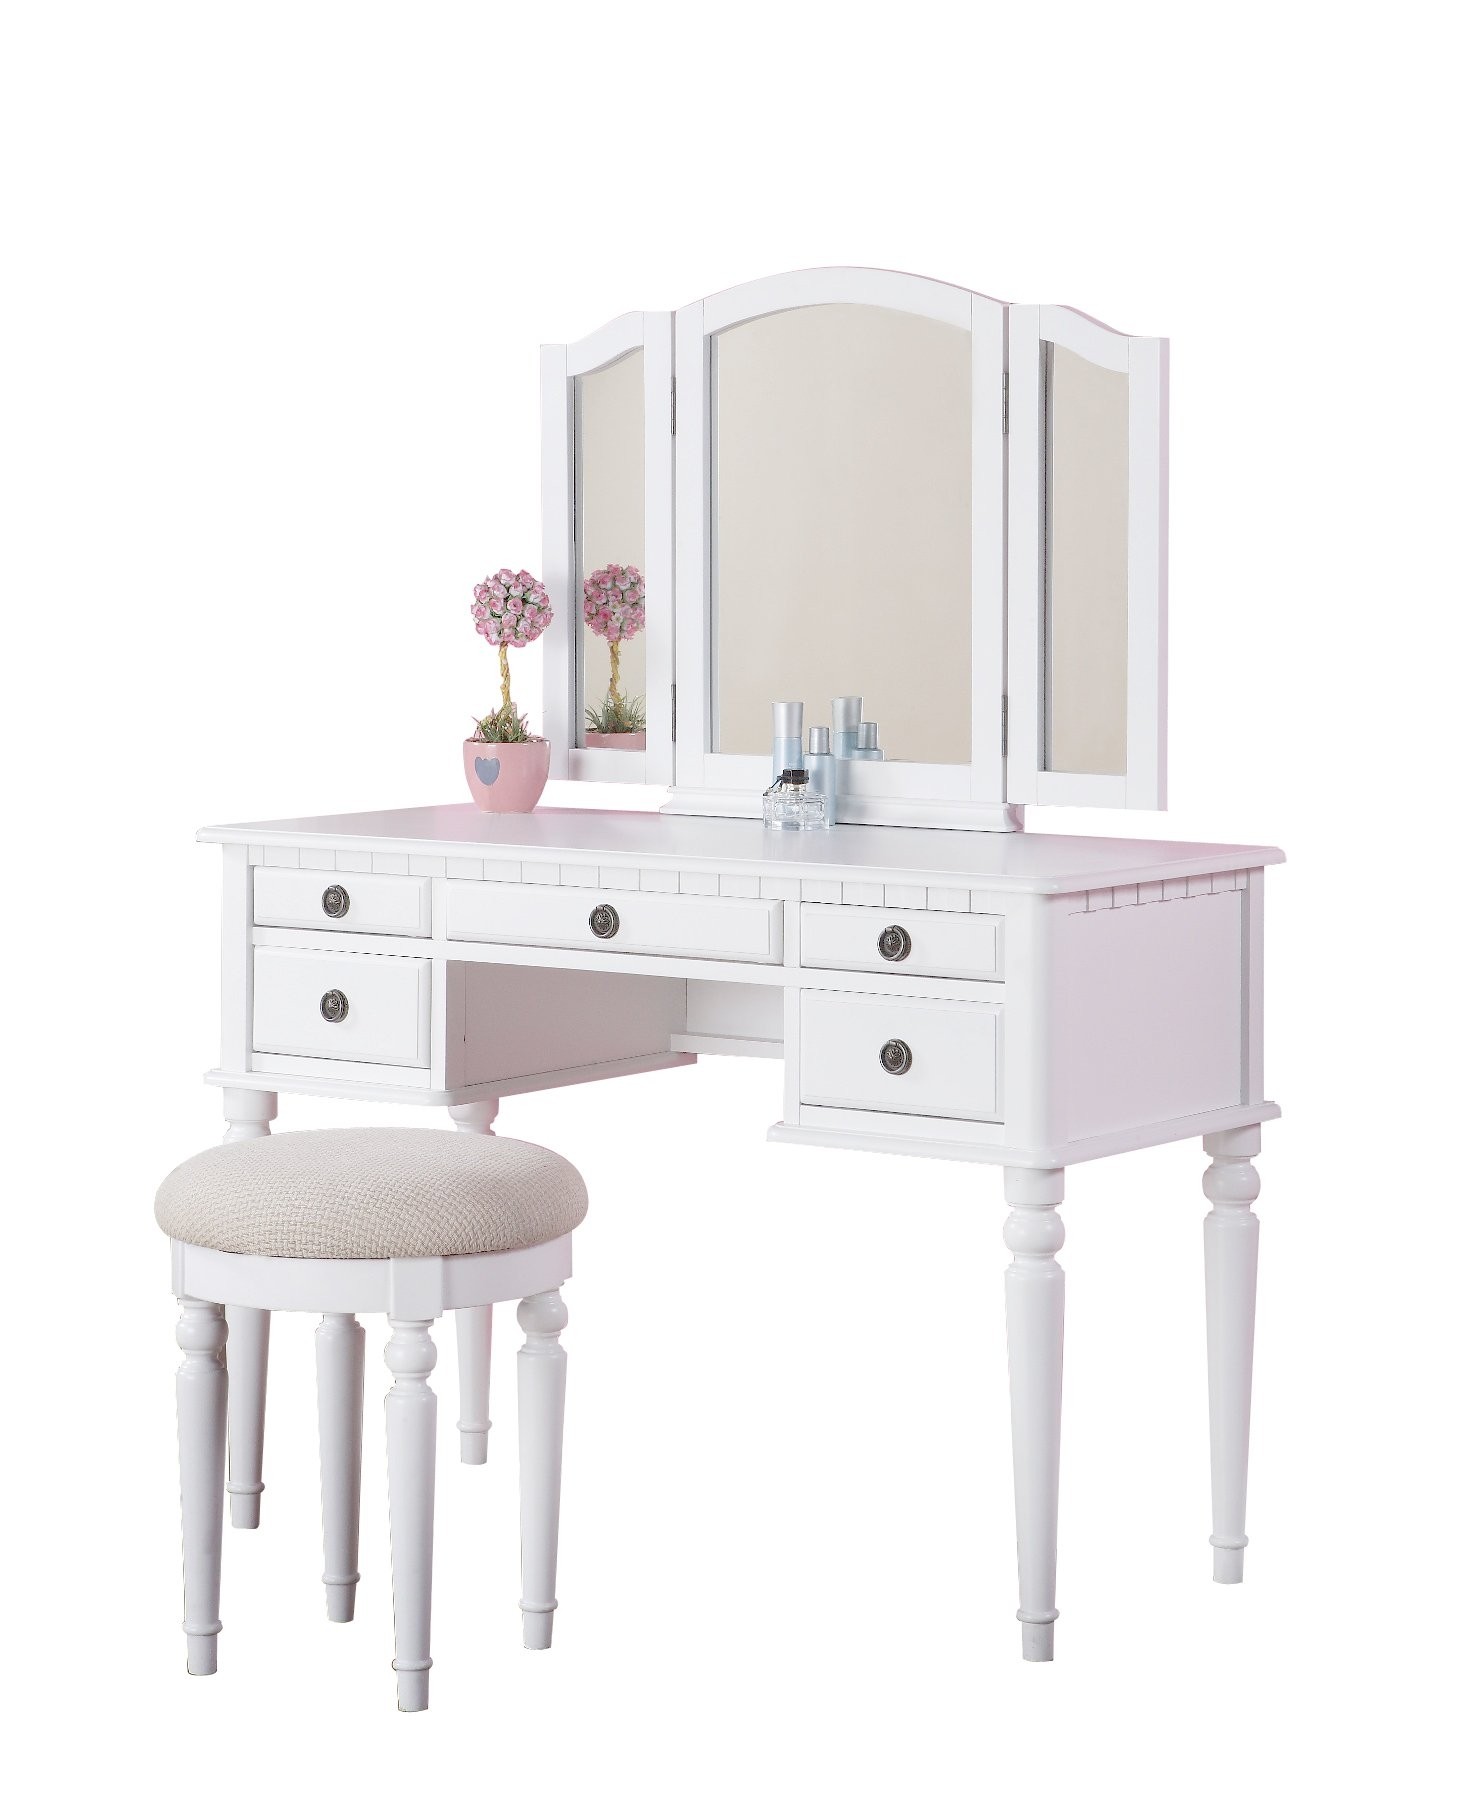 Makeup vanity stool for bedroom decoration ideas inspiring bedroom